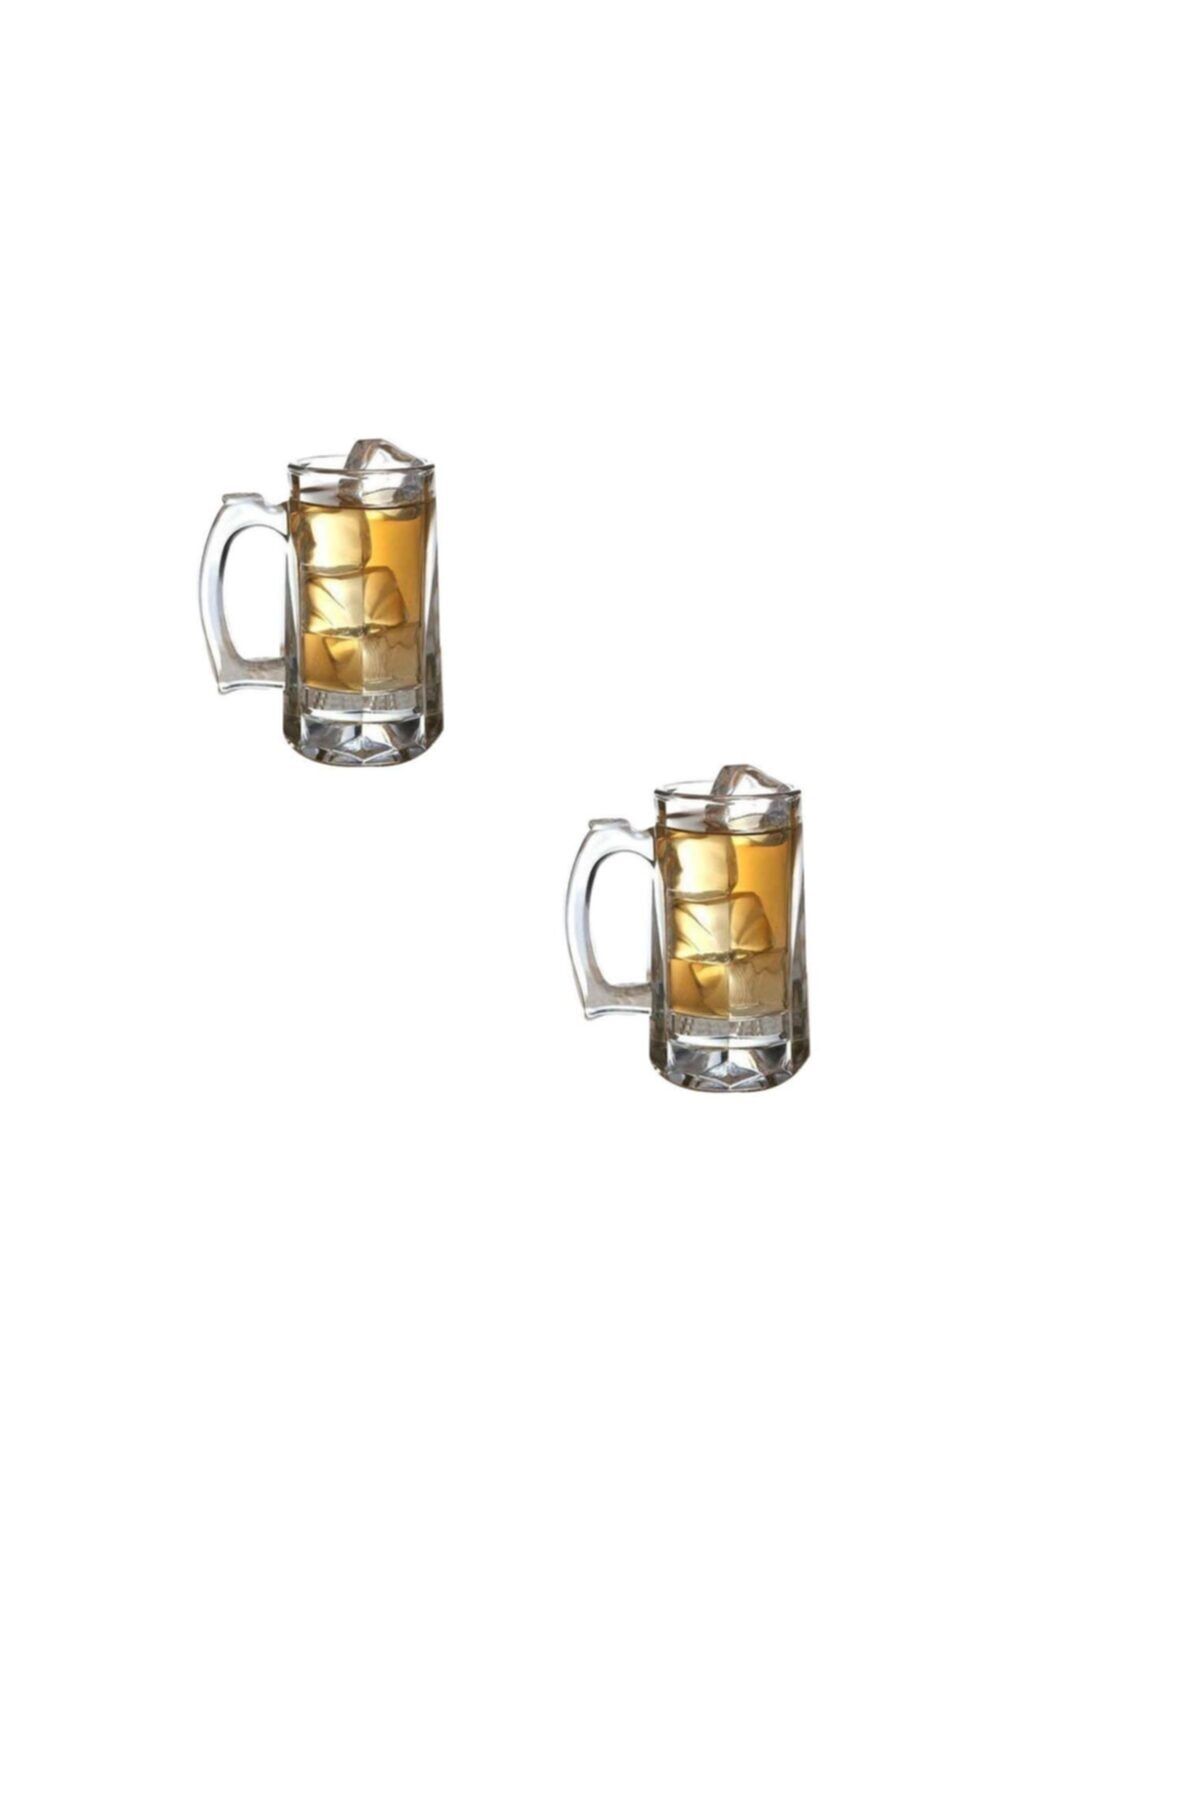 Paşabahçe Pub Bira Bardak - Bira Bardağı 2 Li 55039